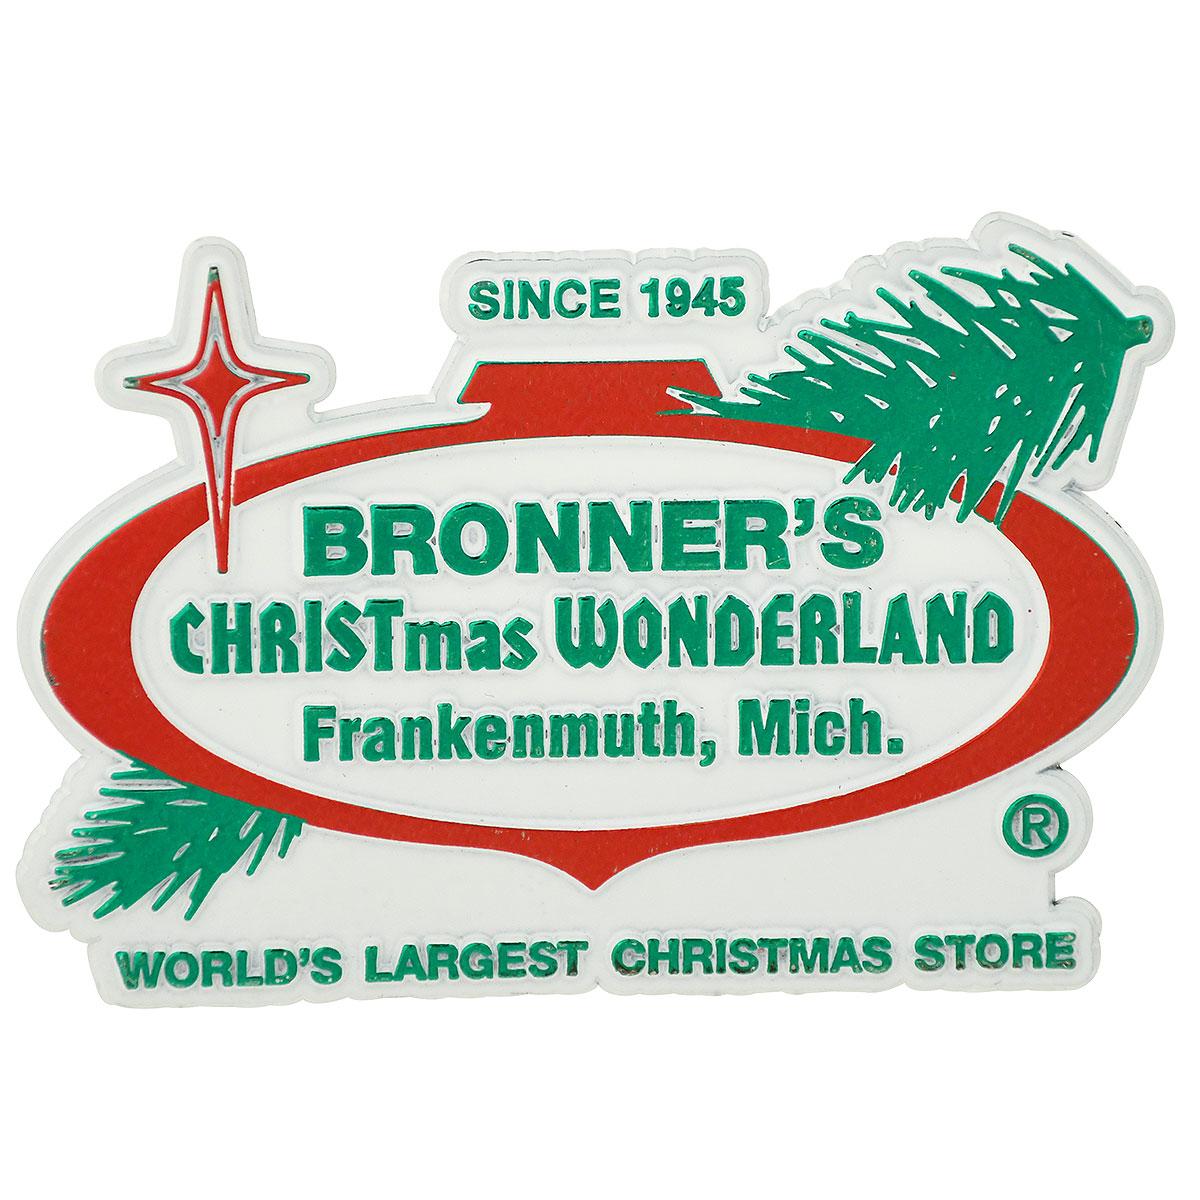 Bronner's Christmas Wonderland logo